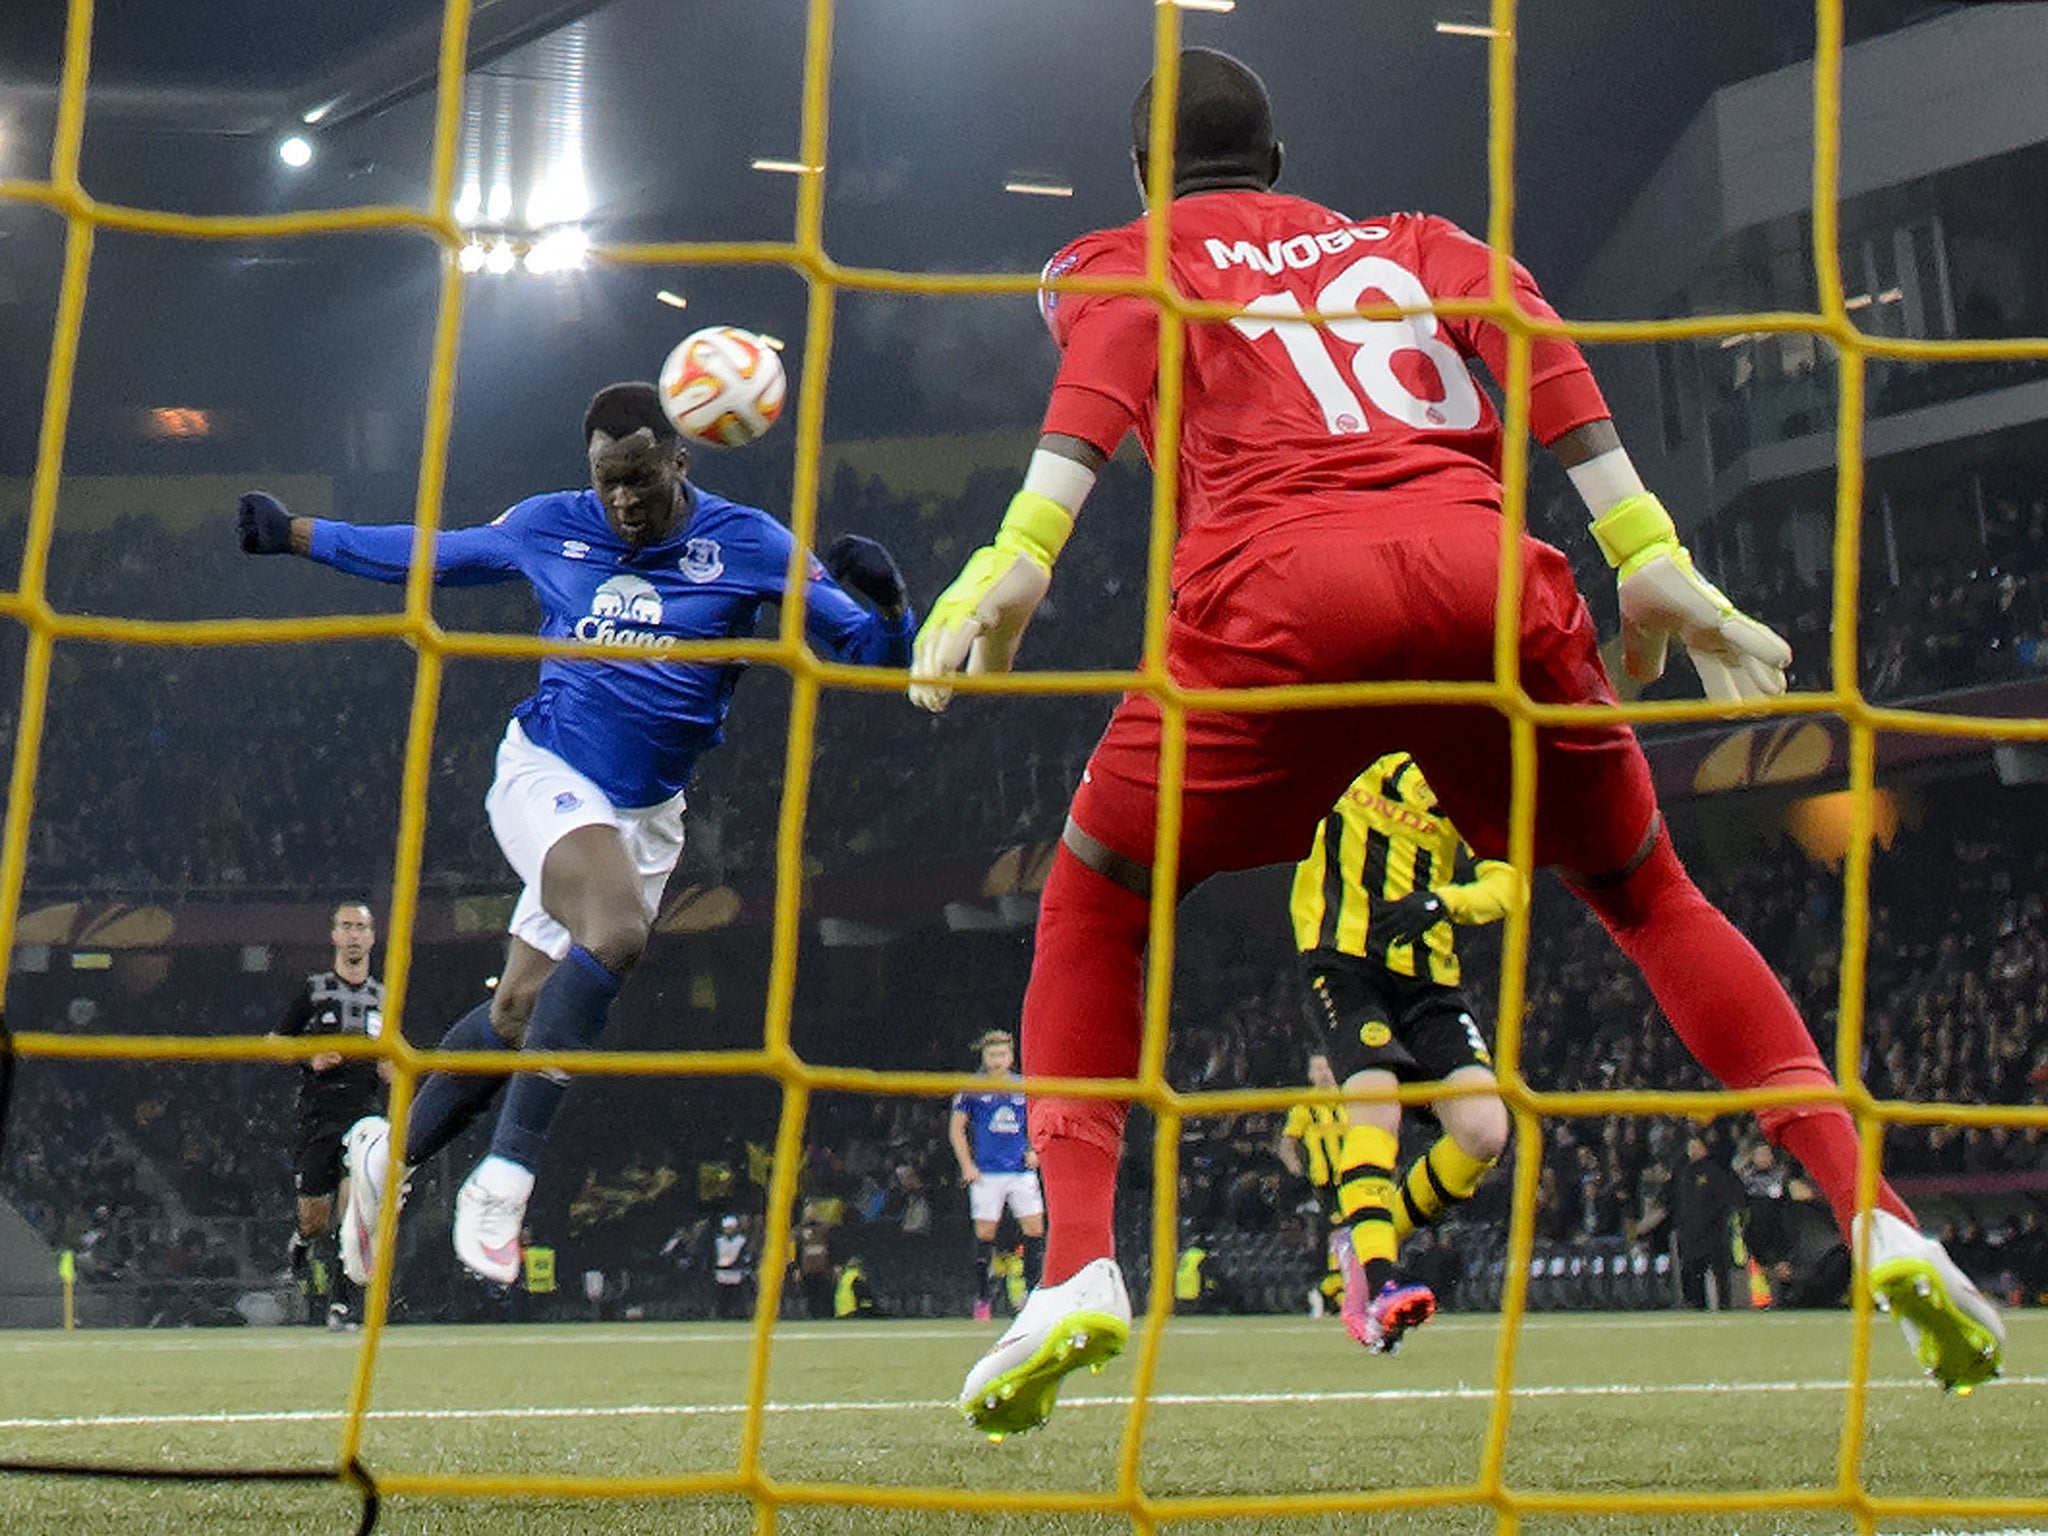 Everton's Romelu Lukaku heads the ball in front of Young Boys' goalkeeper